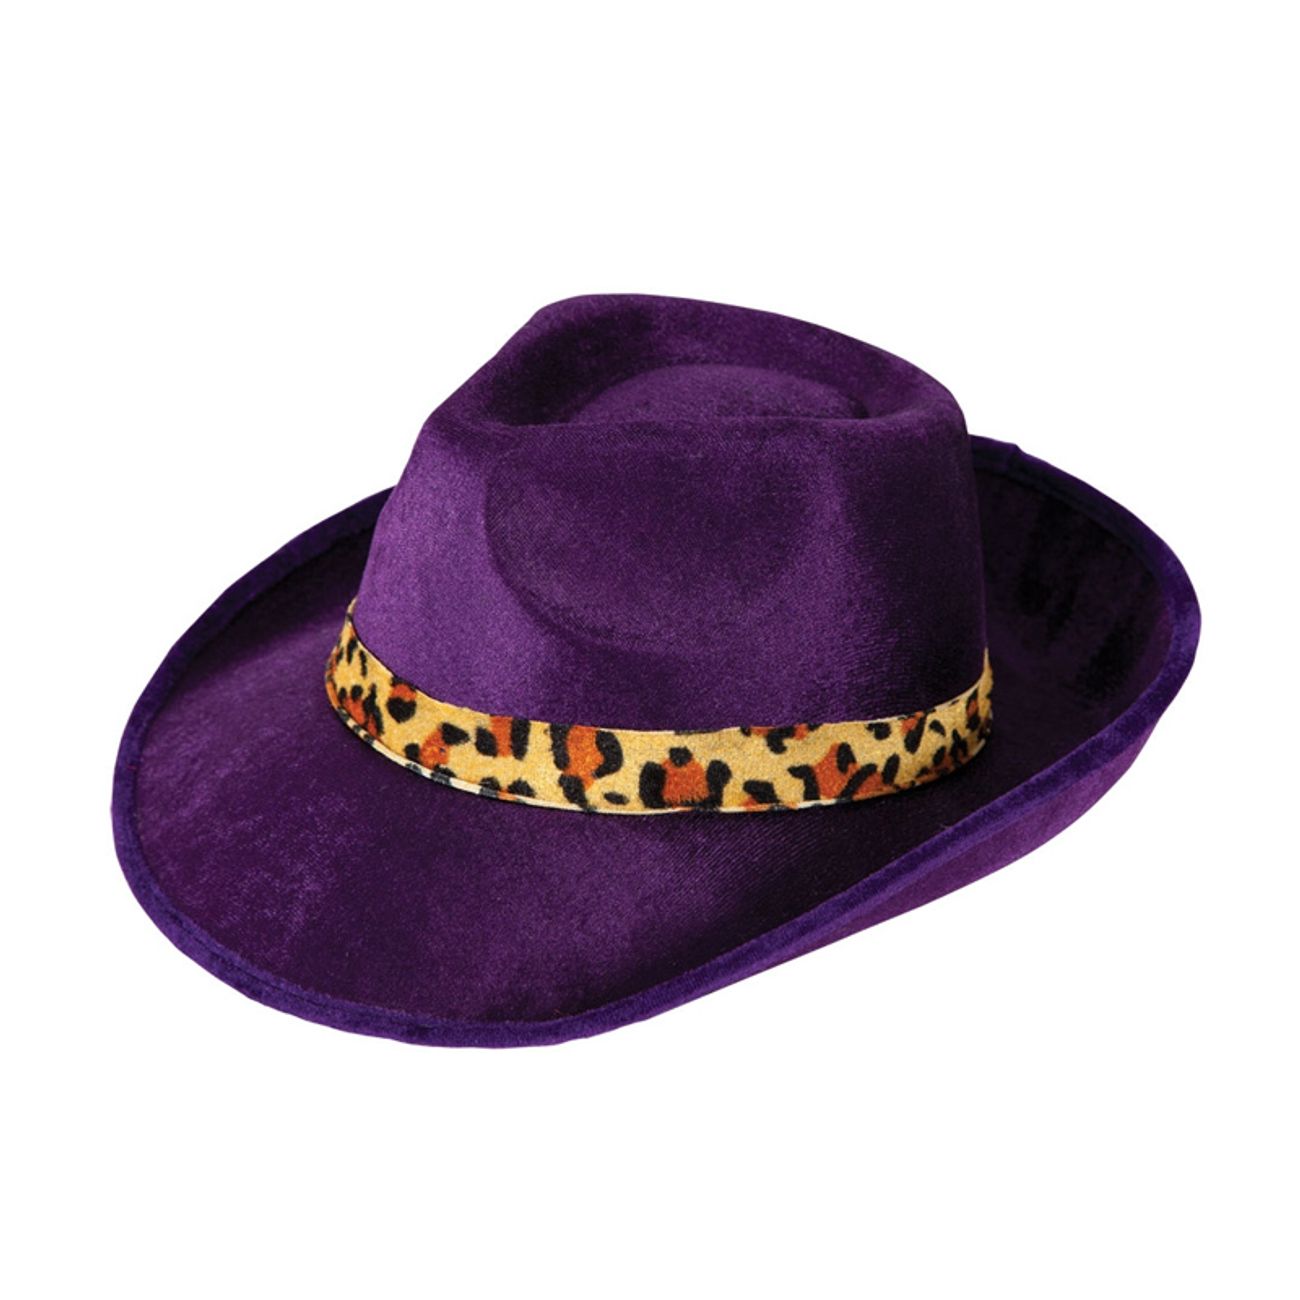 Hat keinen. Шляпа сутенера. Шапка сутенера. Сутенер в фиолетовой шляпе. Сутенерская шляпа с пером.